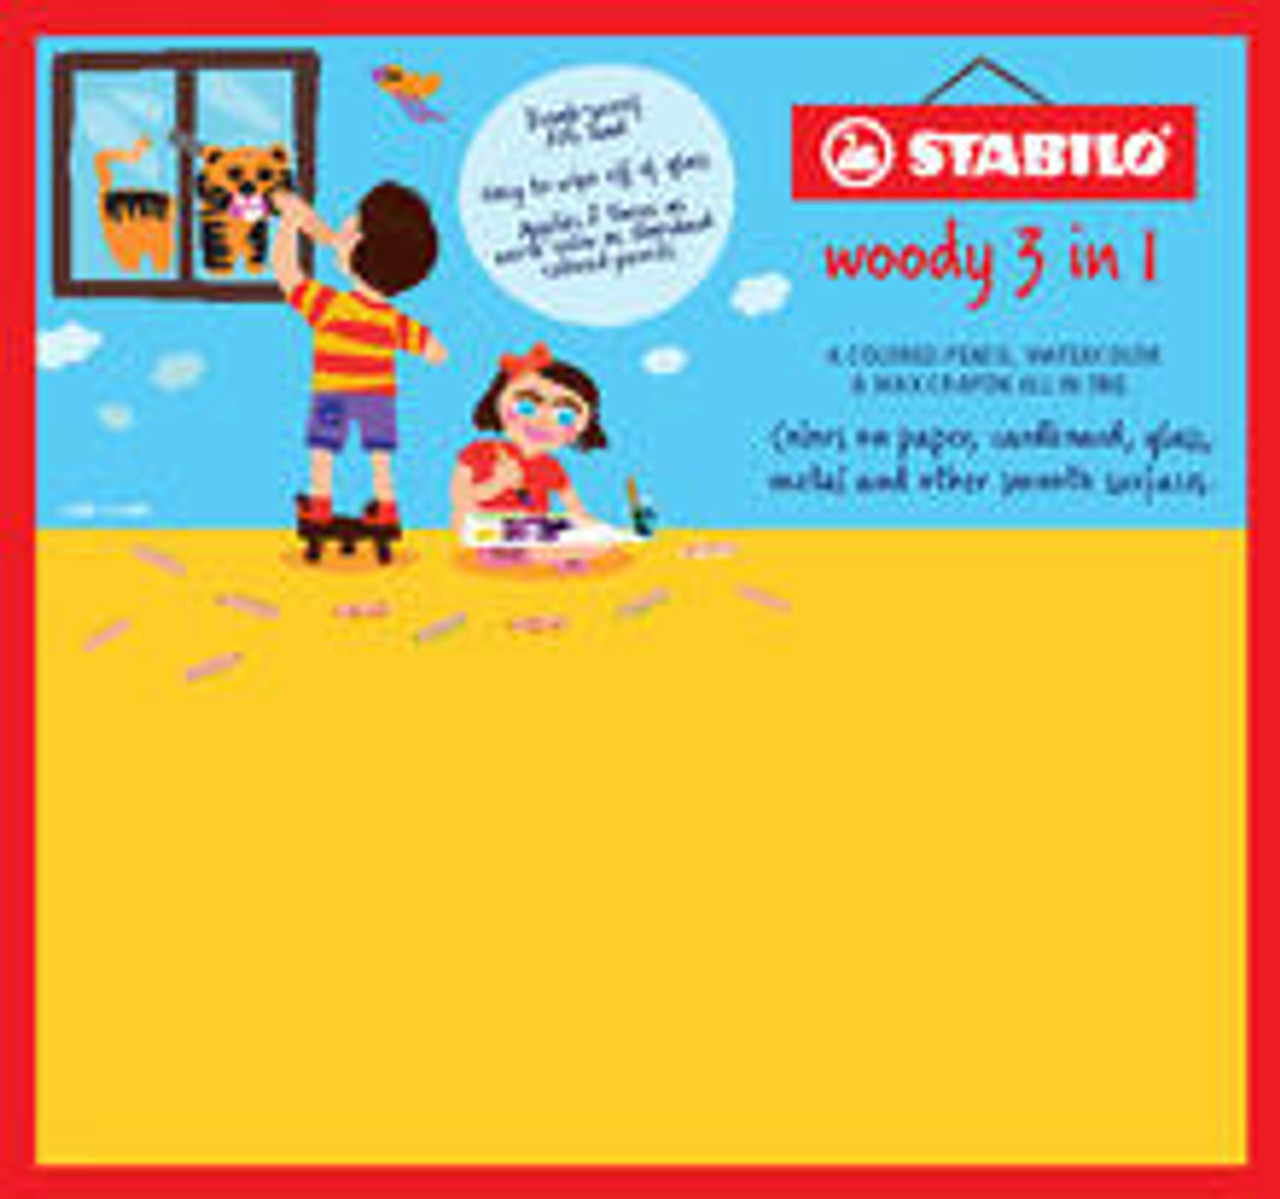 Stabilo - STABILO Woody 3 in 1 - Set - 10-Color Set - Sam Flax Atlanta